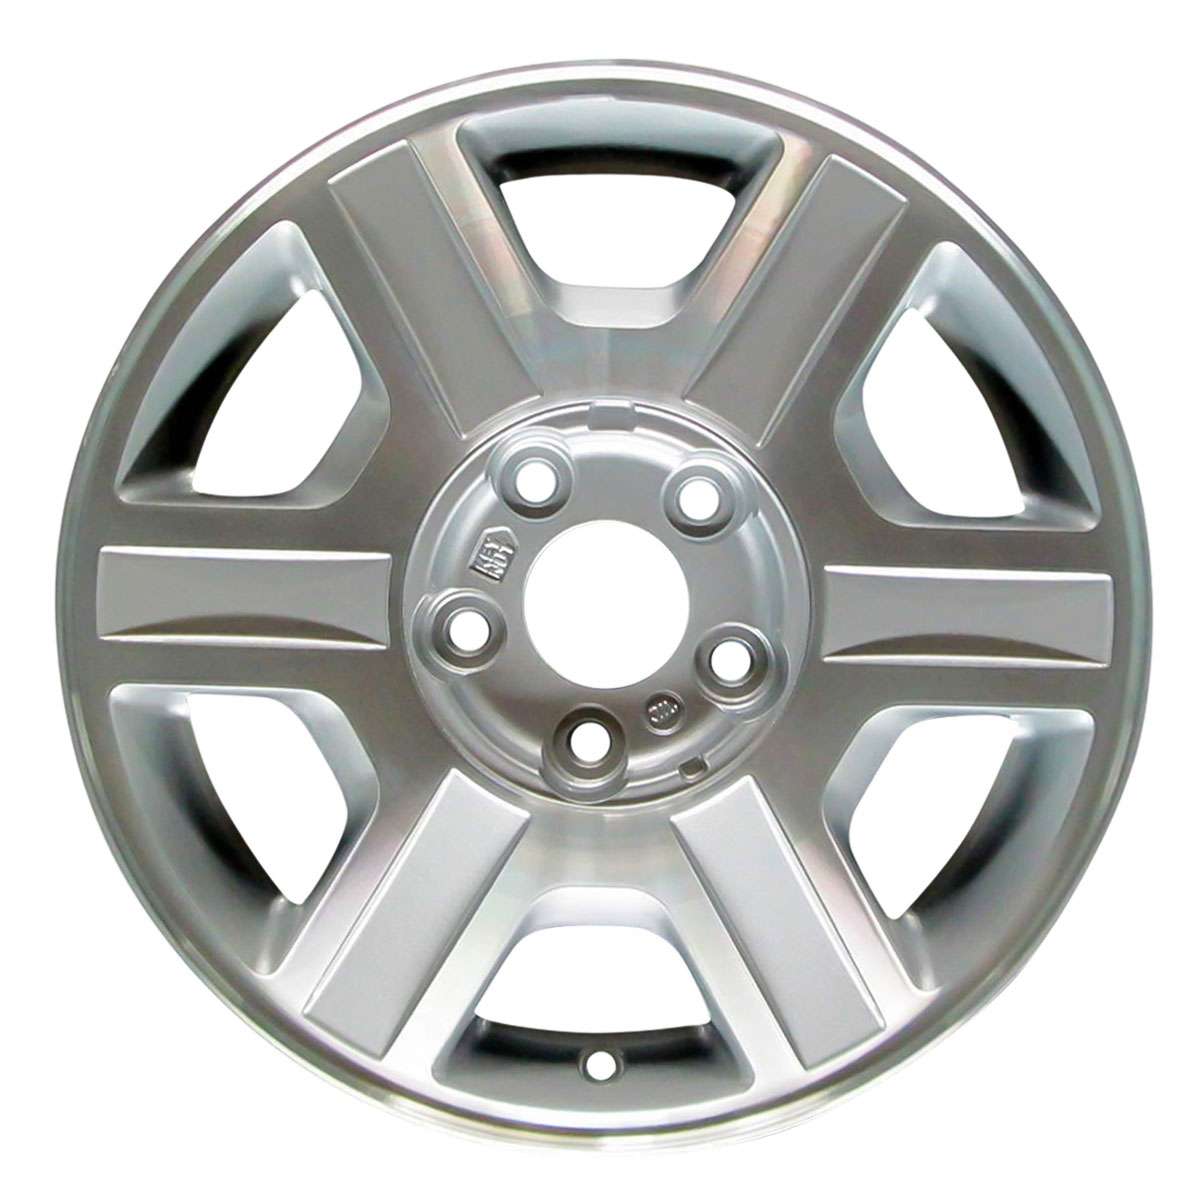 2001 Mercury Villager 16" OEM Wheel Rim W3417MS